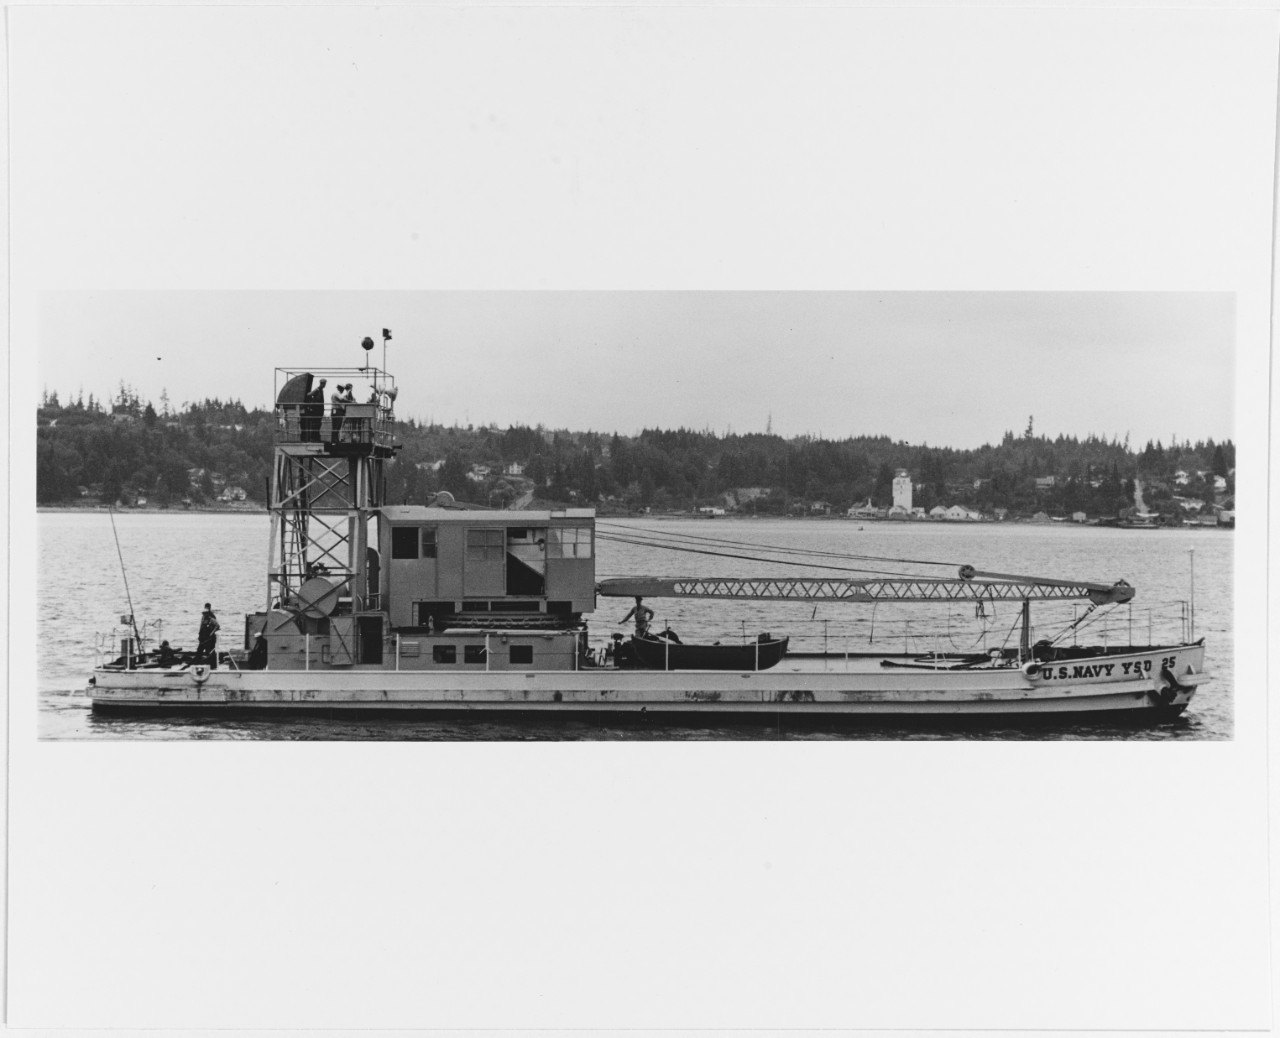 USS YSD-25